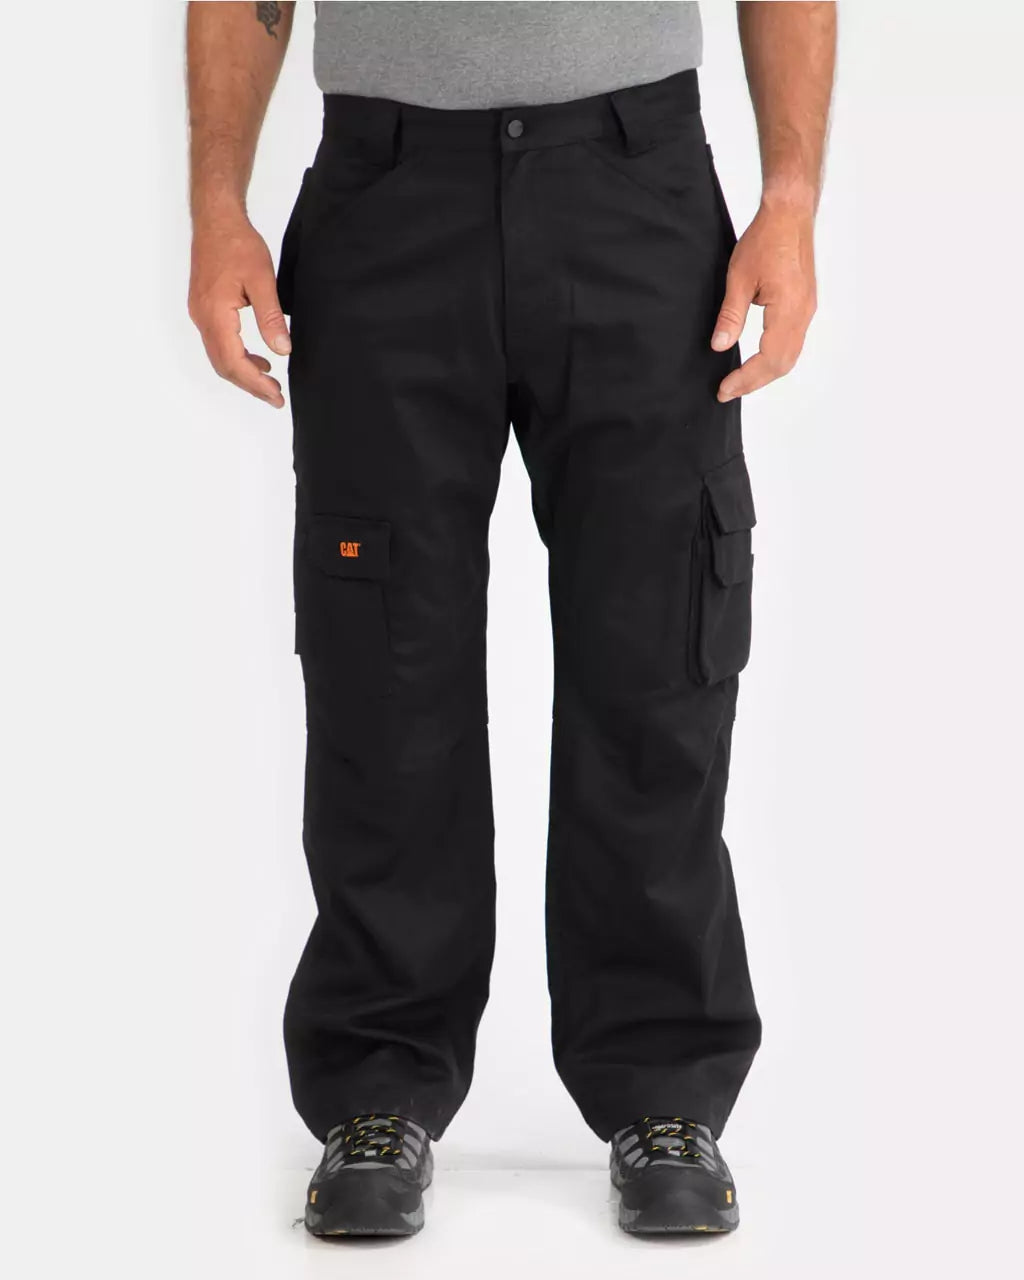 TICOMELA FR Pants for Men Flame Resistant Cargo Pants 7.5oz Gray